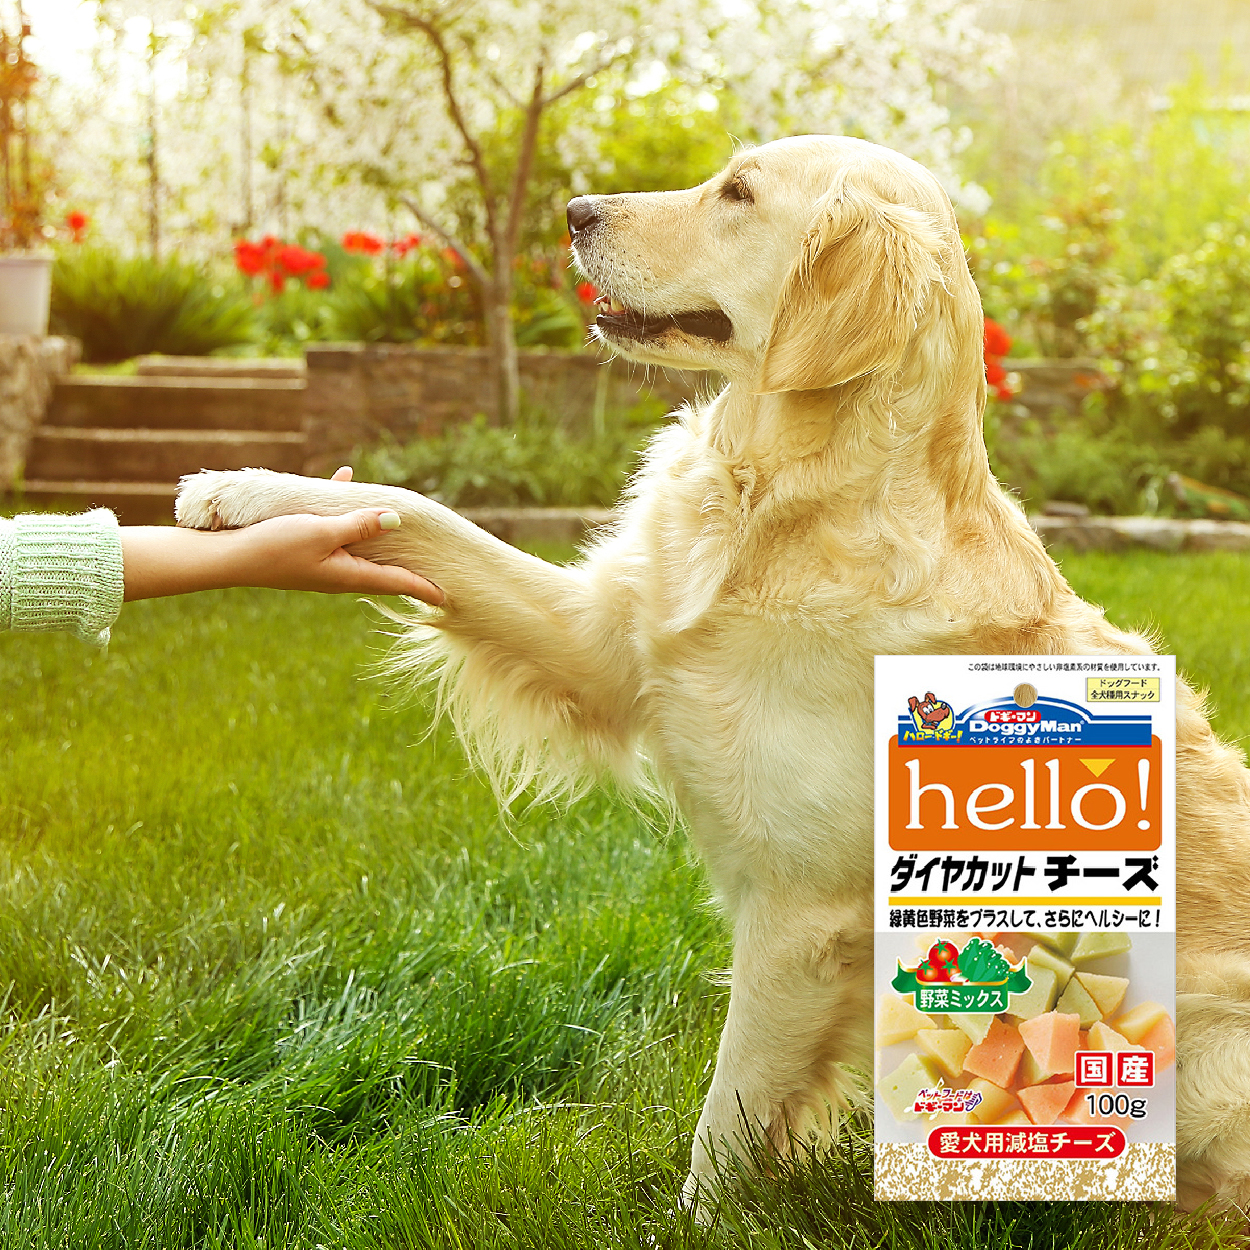 DoggyMan Hello! 犬用角切野菜起司塊 小巧起司零食 補充天然野菜營養